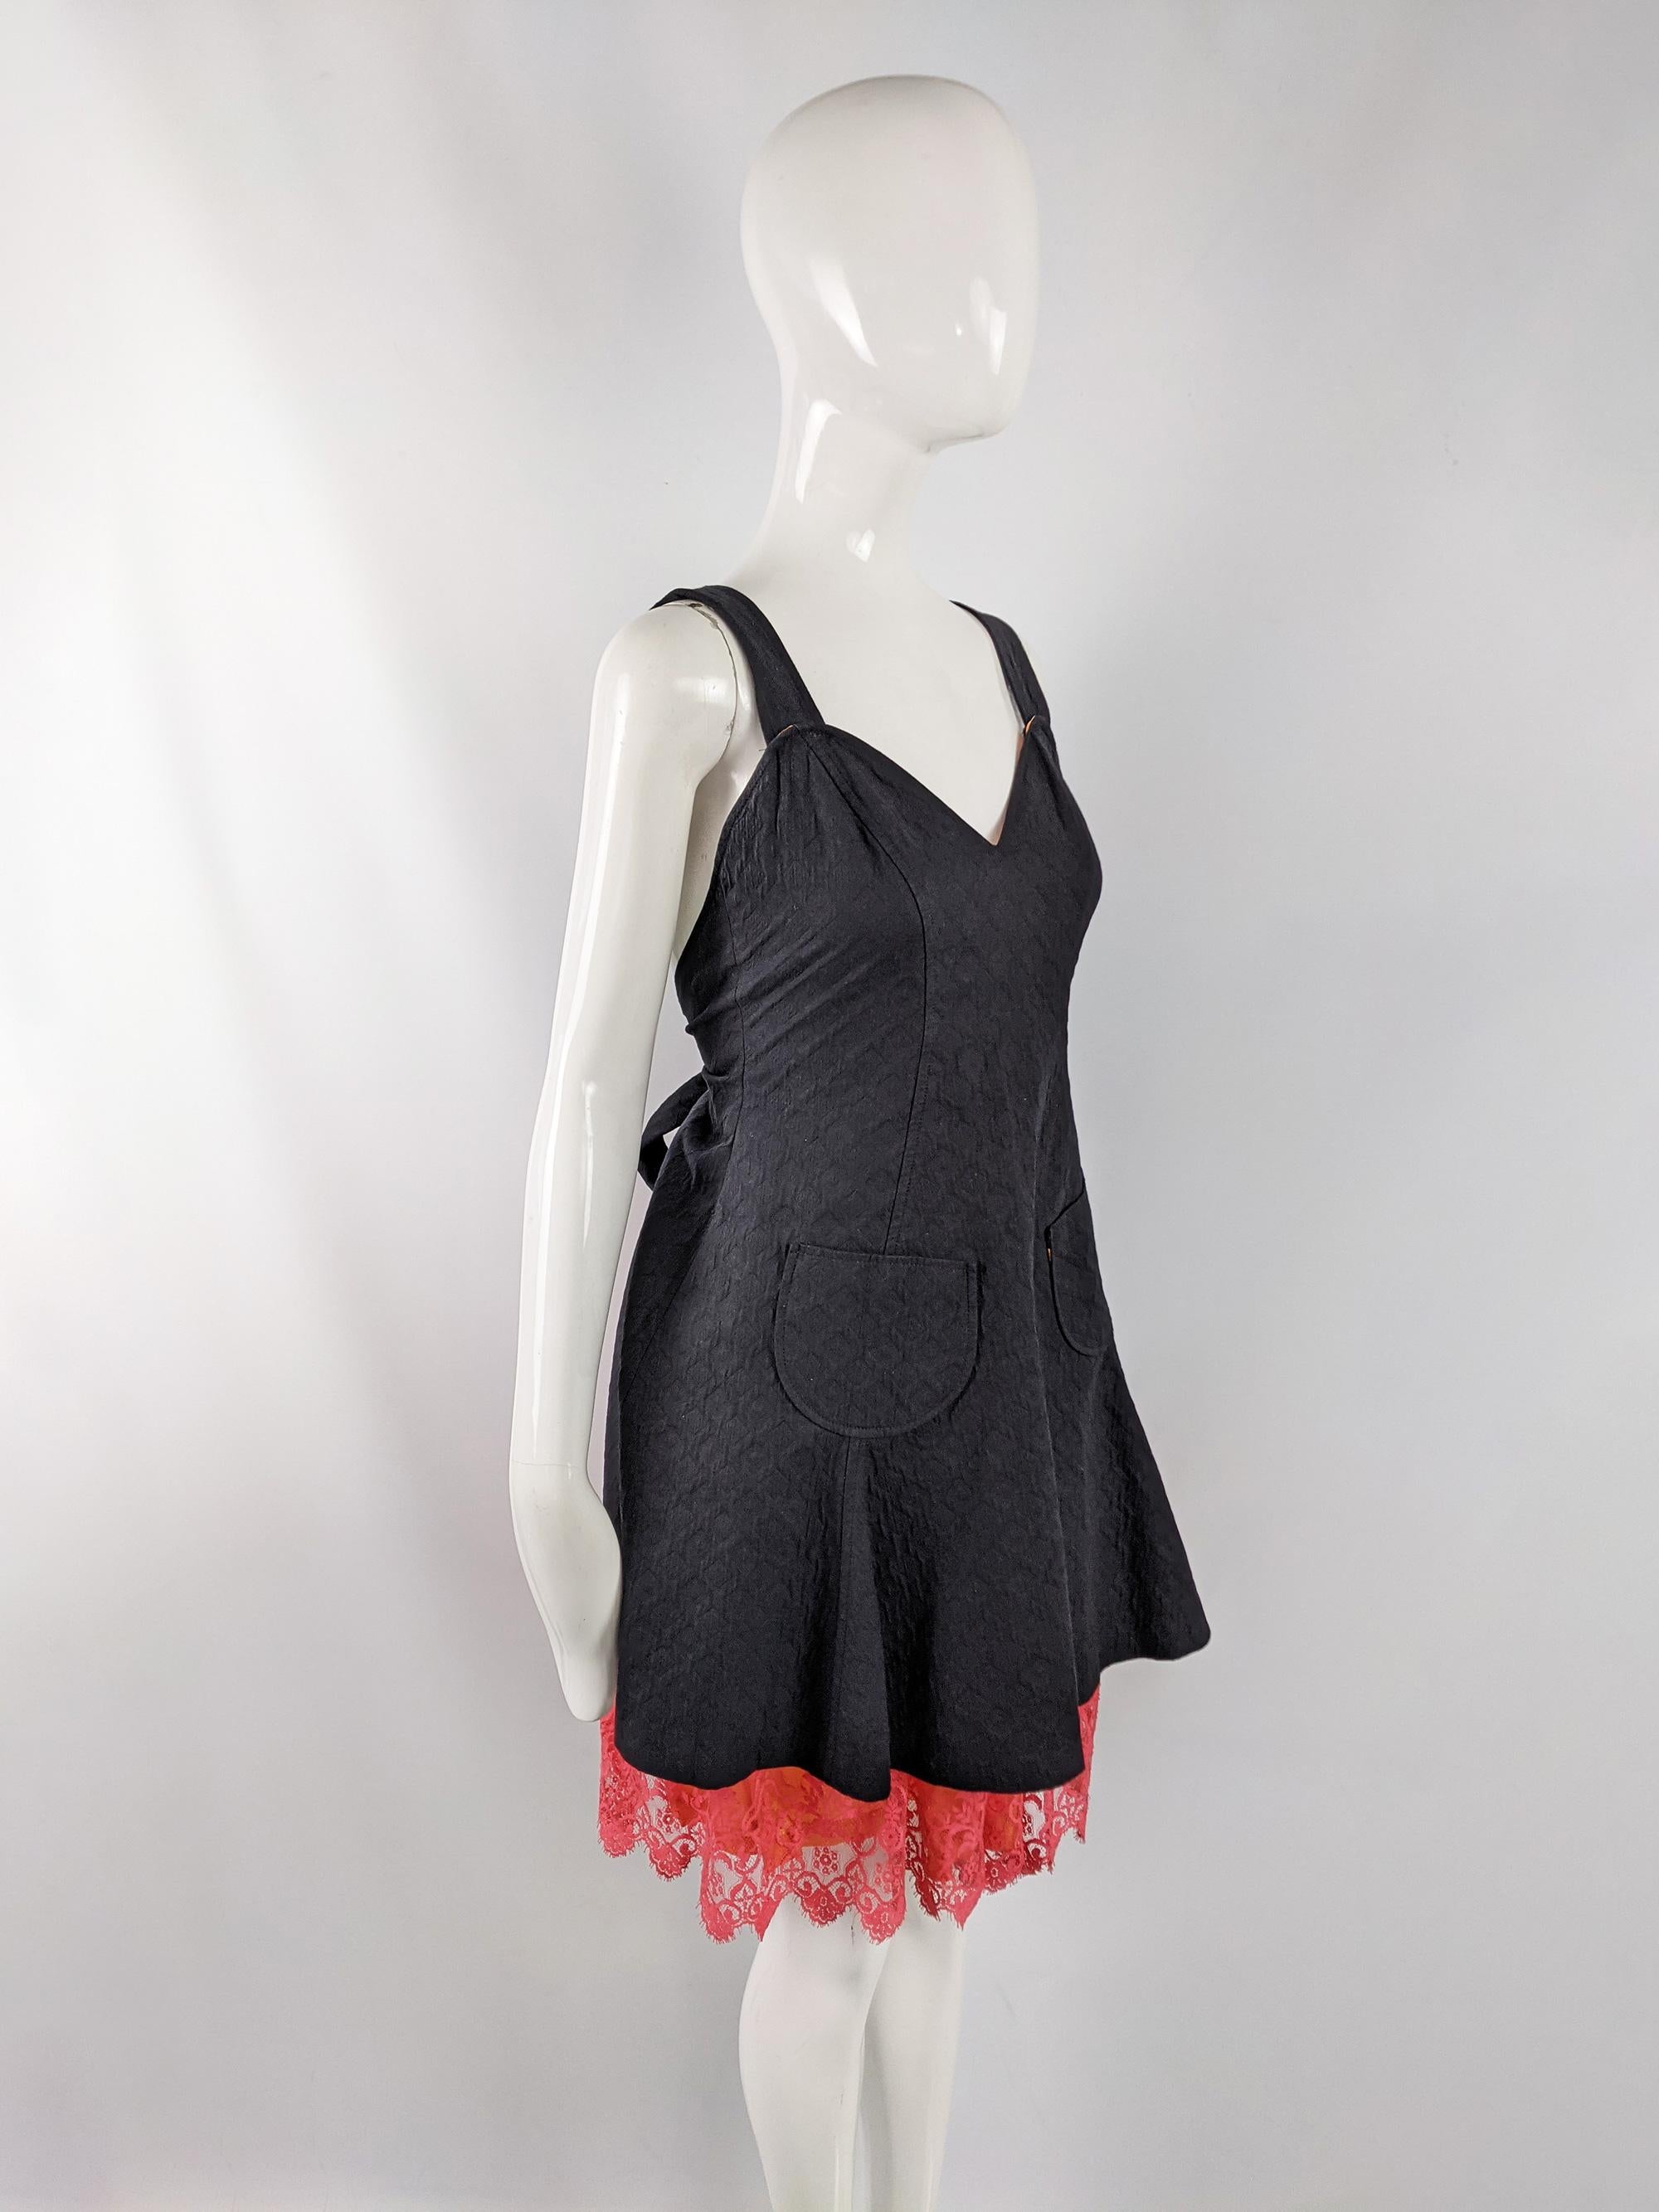 Christian Lacroix Bazar Vintage Black Apron & Coral Lace Dress, 1990s In Good Condition For Sale In Doncaster, South Yorkshire